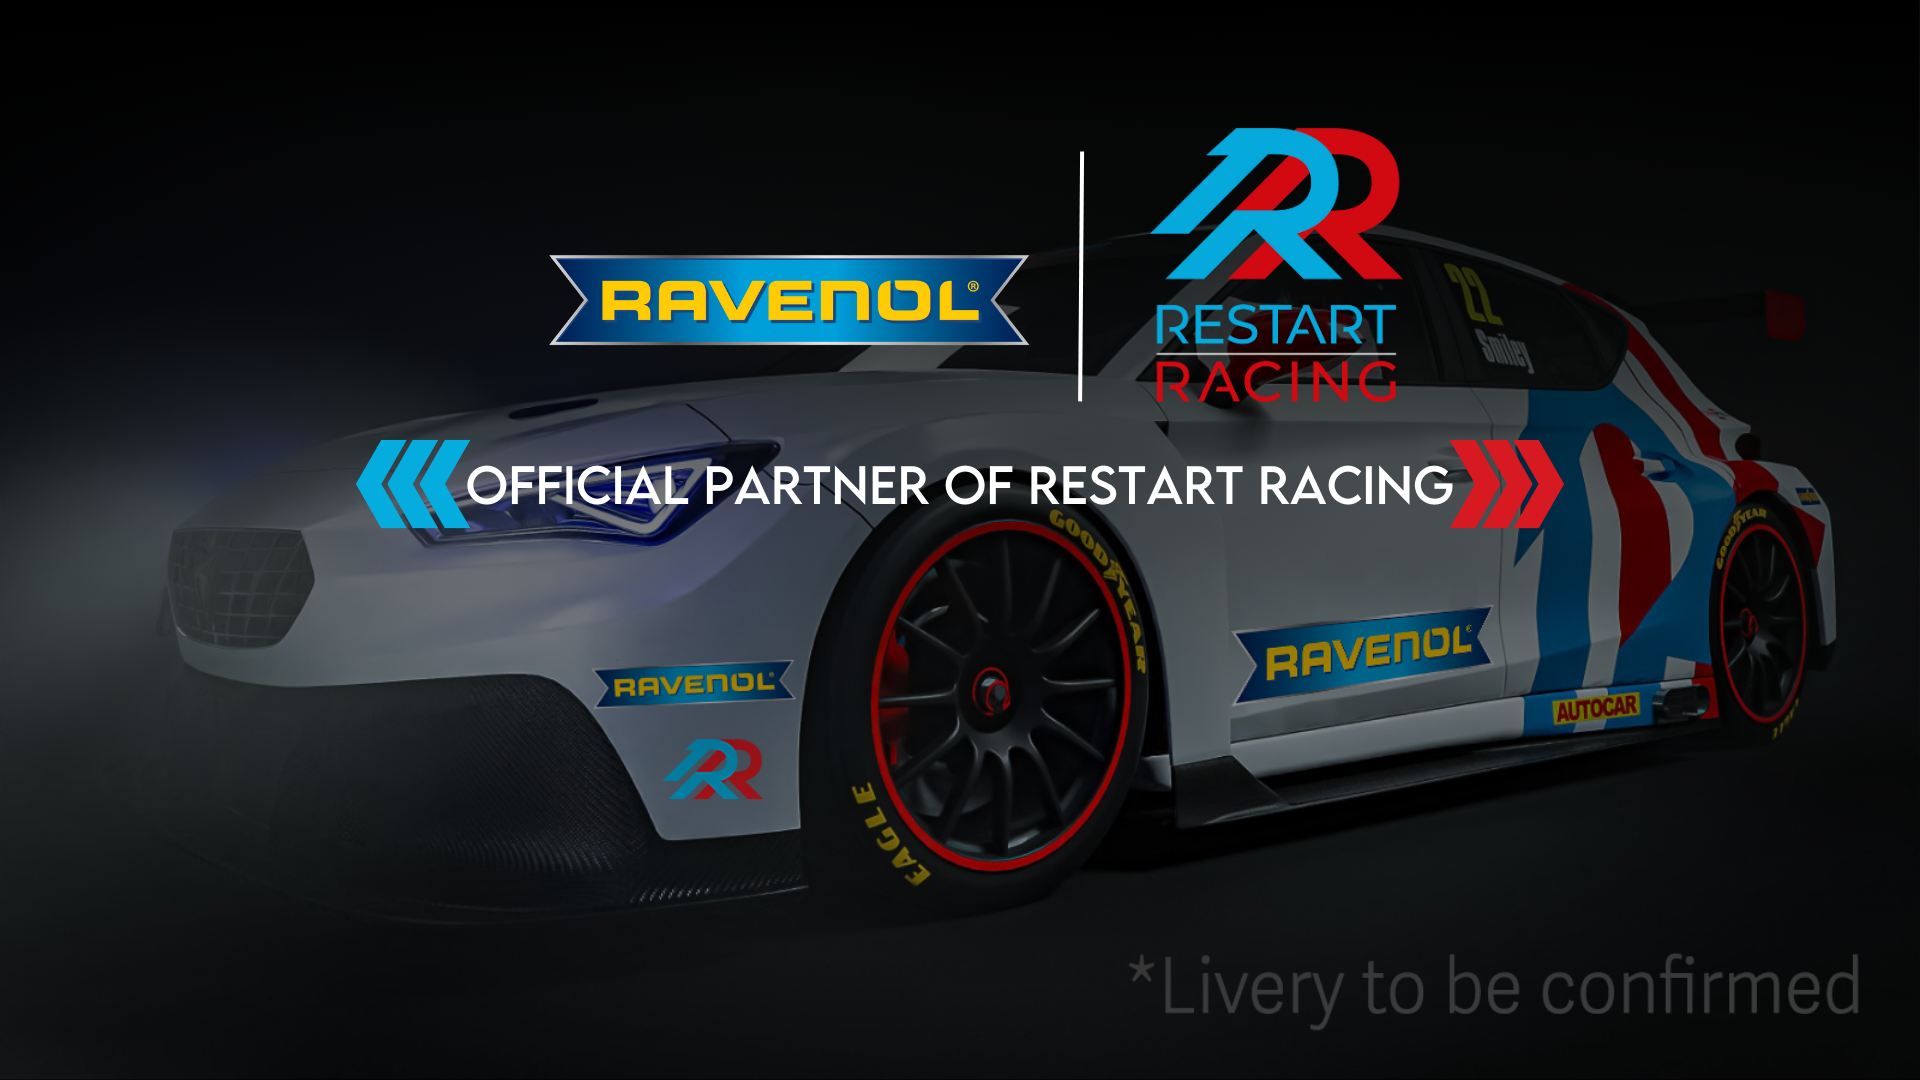 Ravenol Partner with Restart Racing